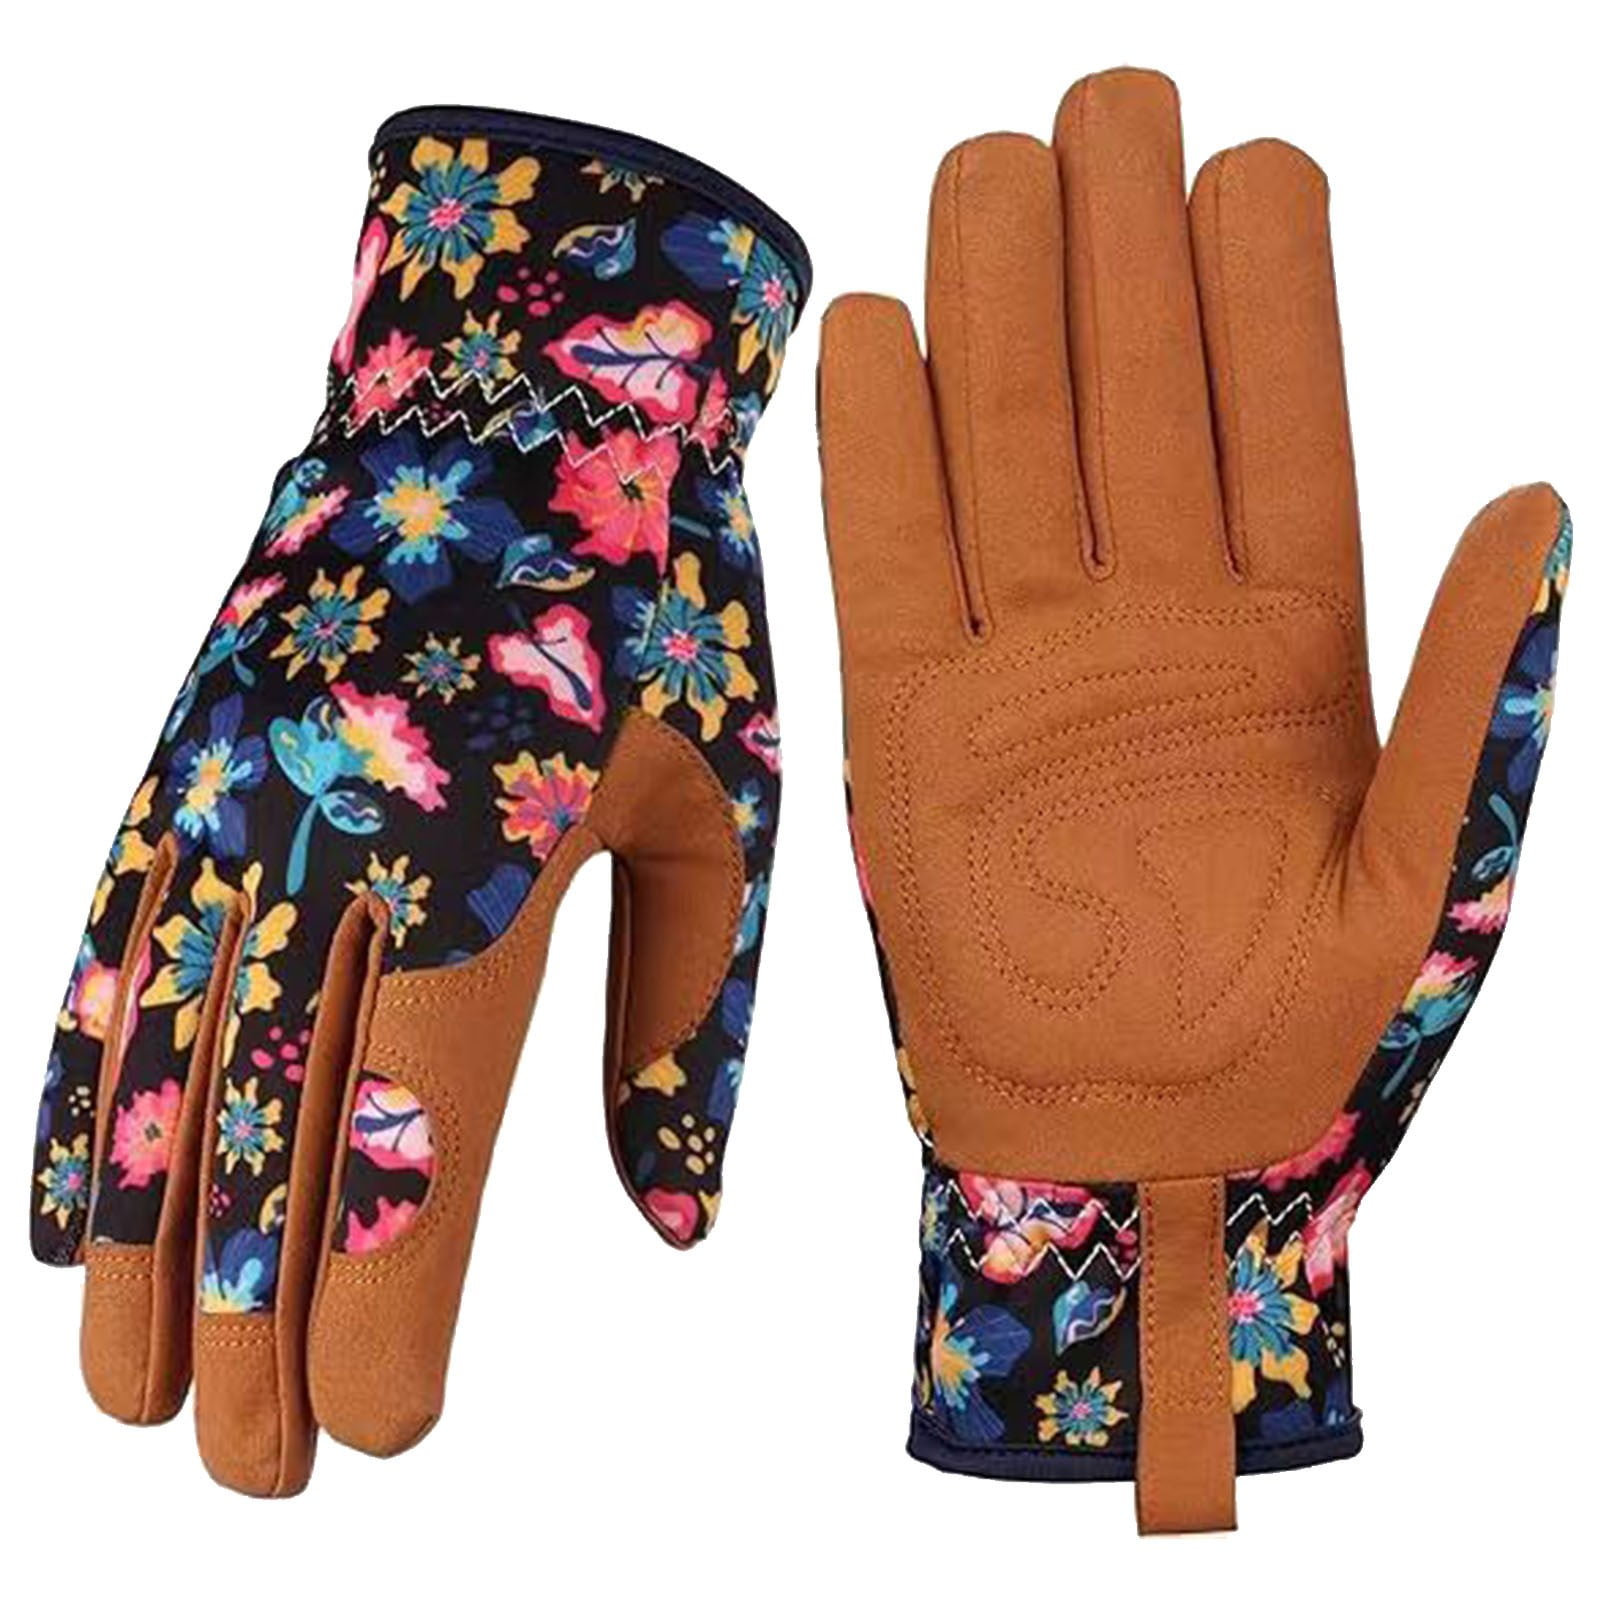 Gbayxj Trim Tool Gardening Gloves For Women Leather Garden Gloves Thorn ...